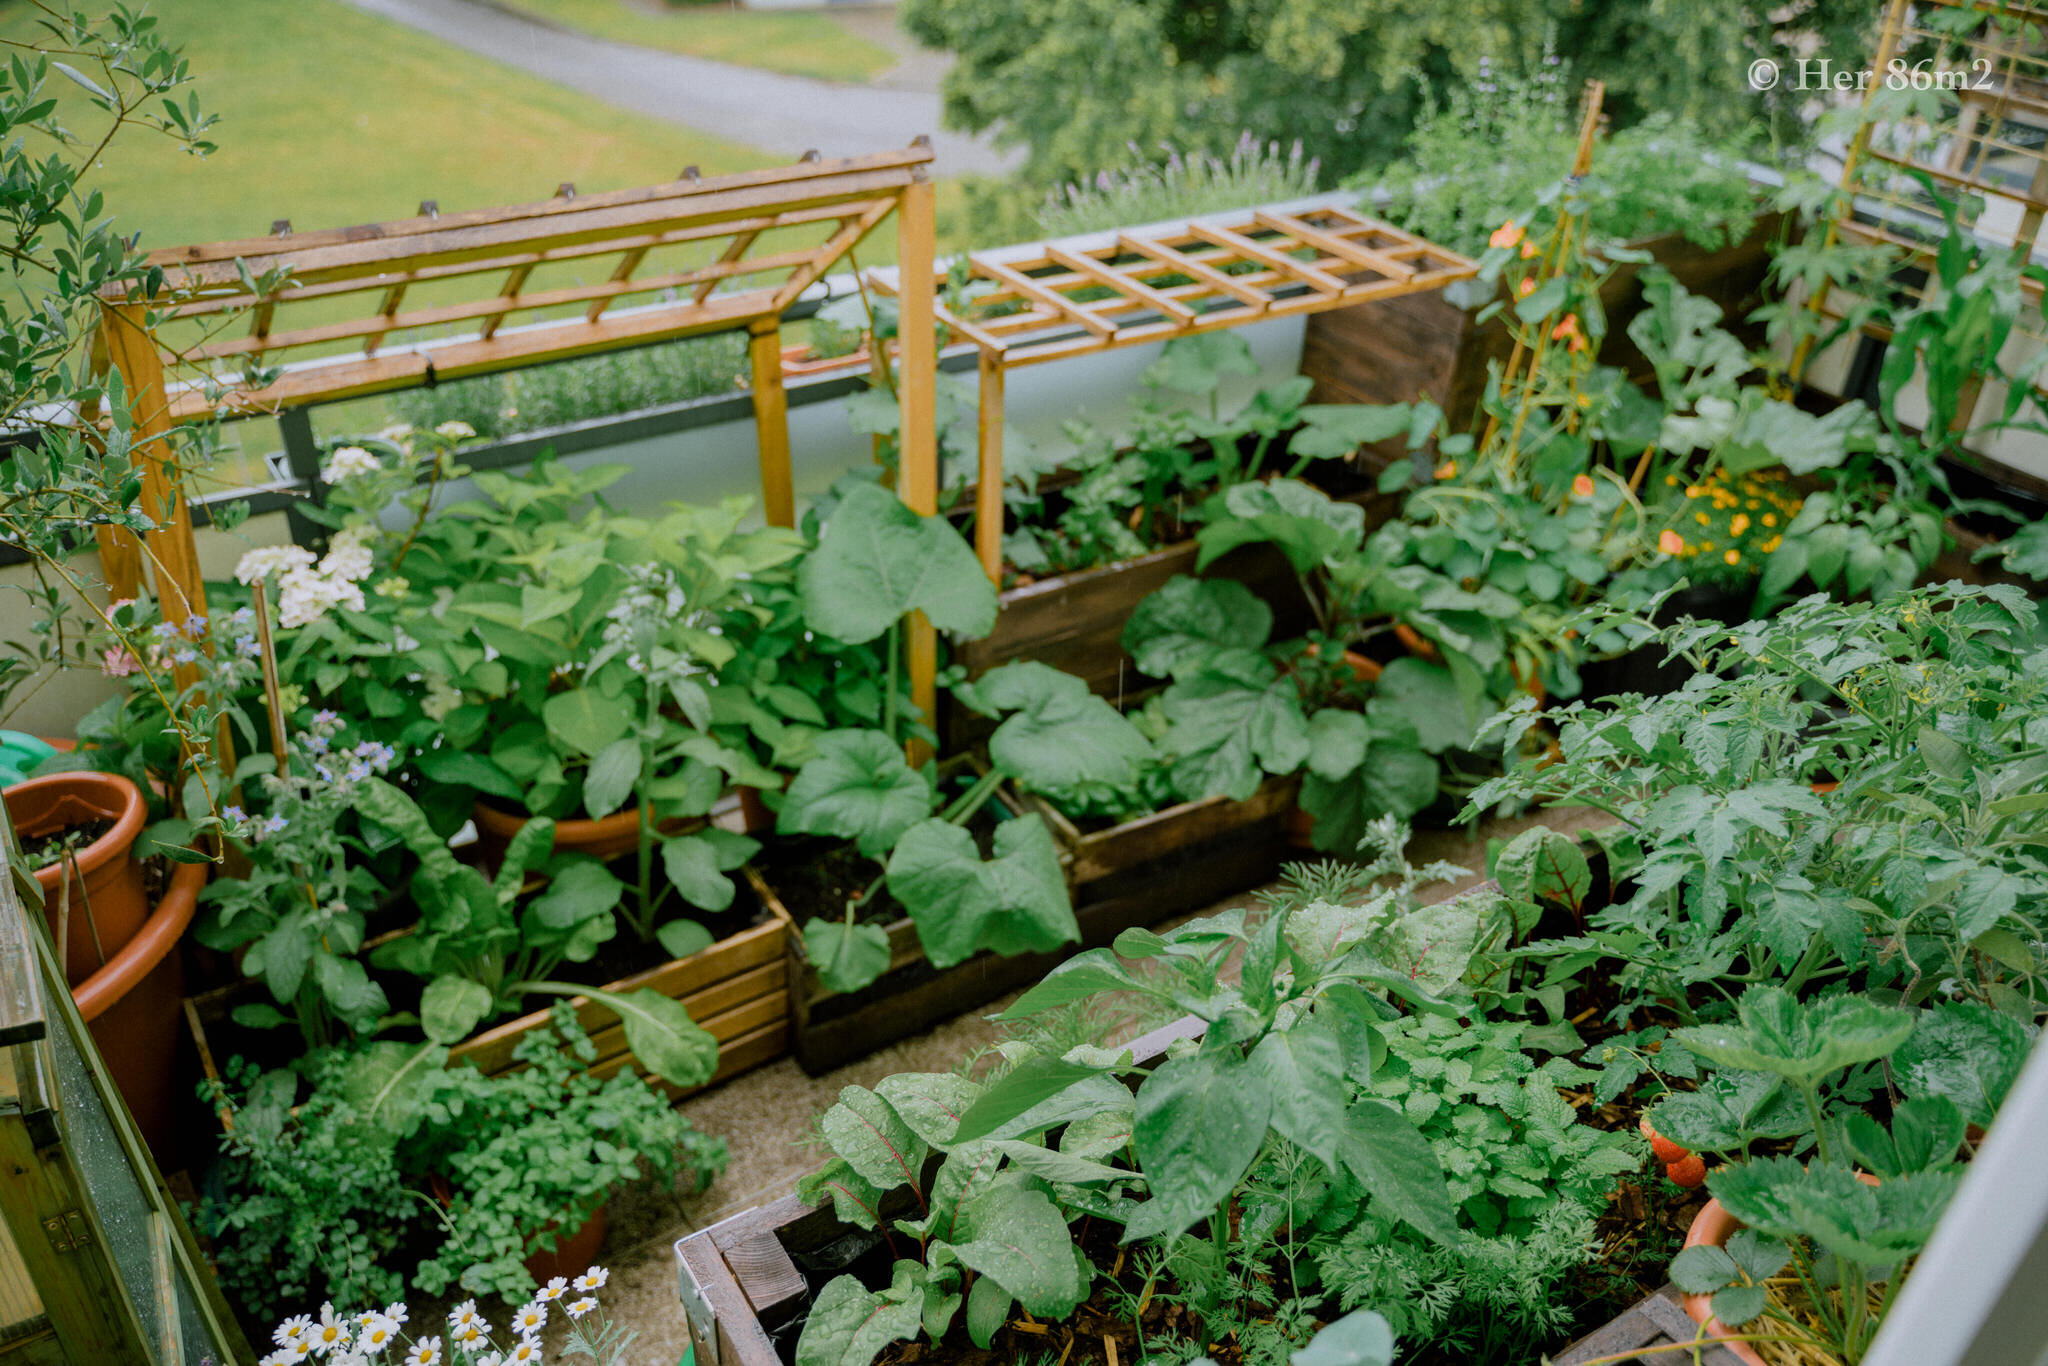 Her 86m2 - My 8m² Balcony Vegetable Garden | A Wonderful 200 Day Journey 165.jpg